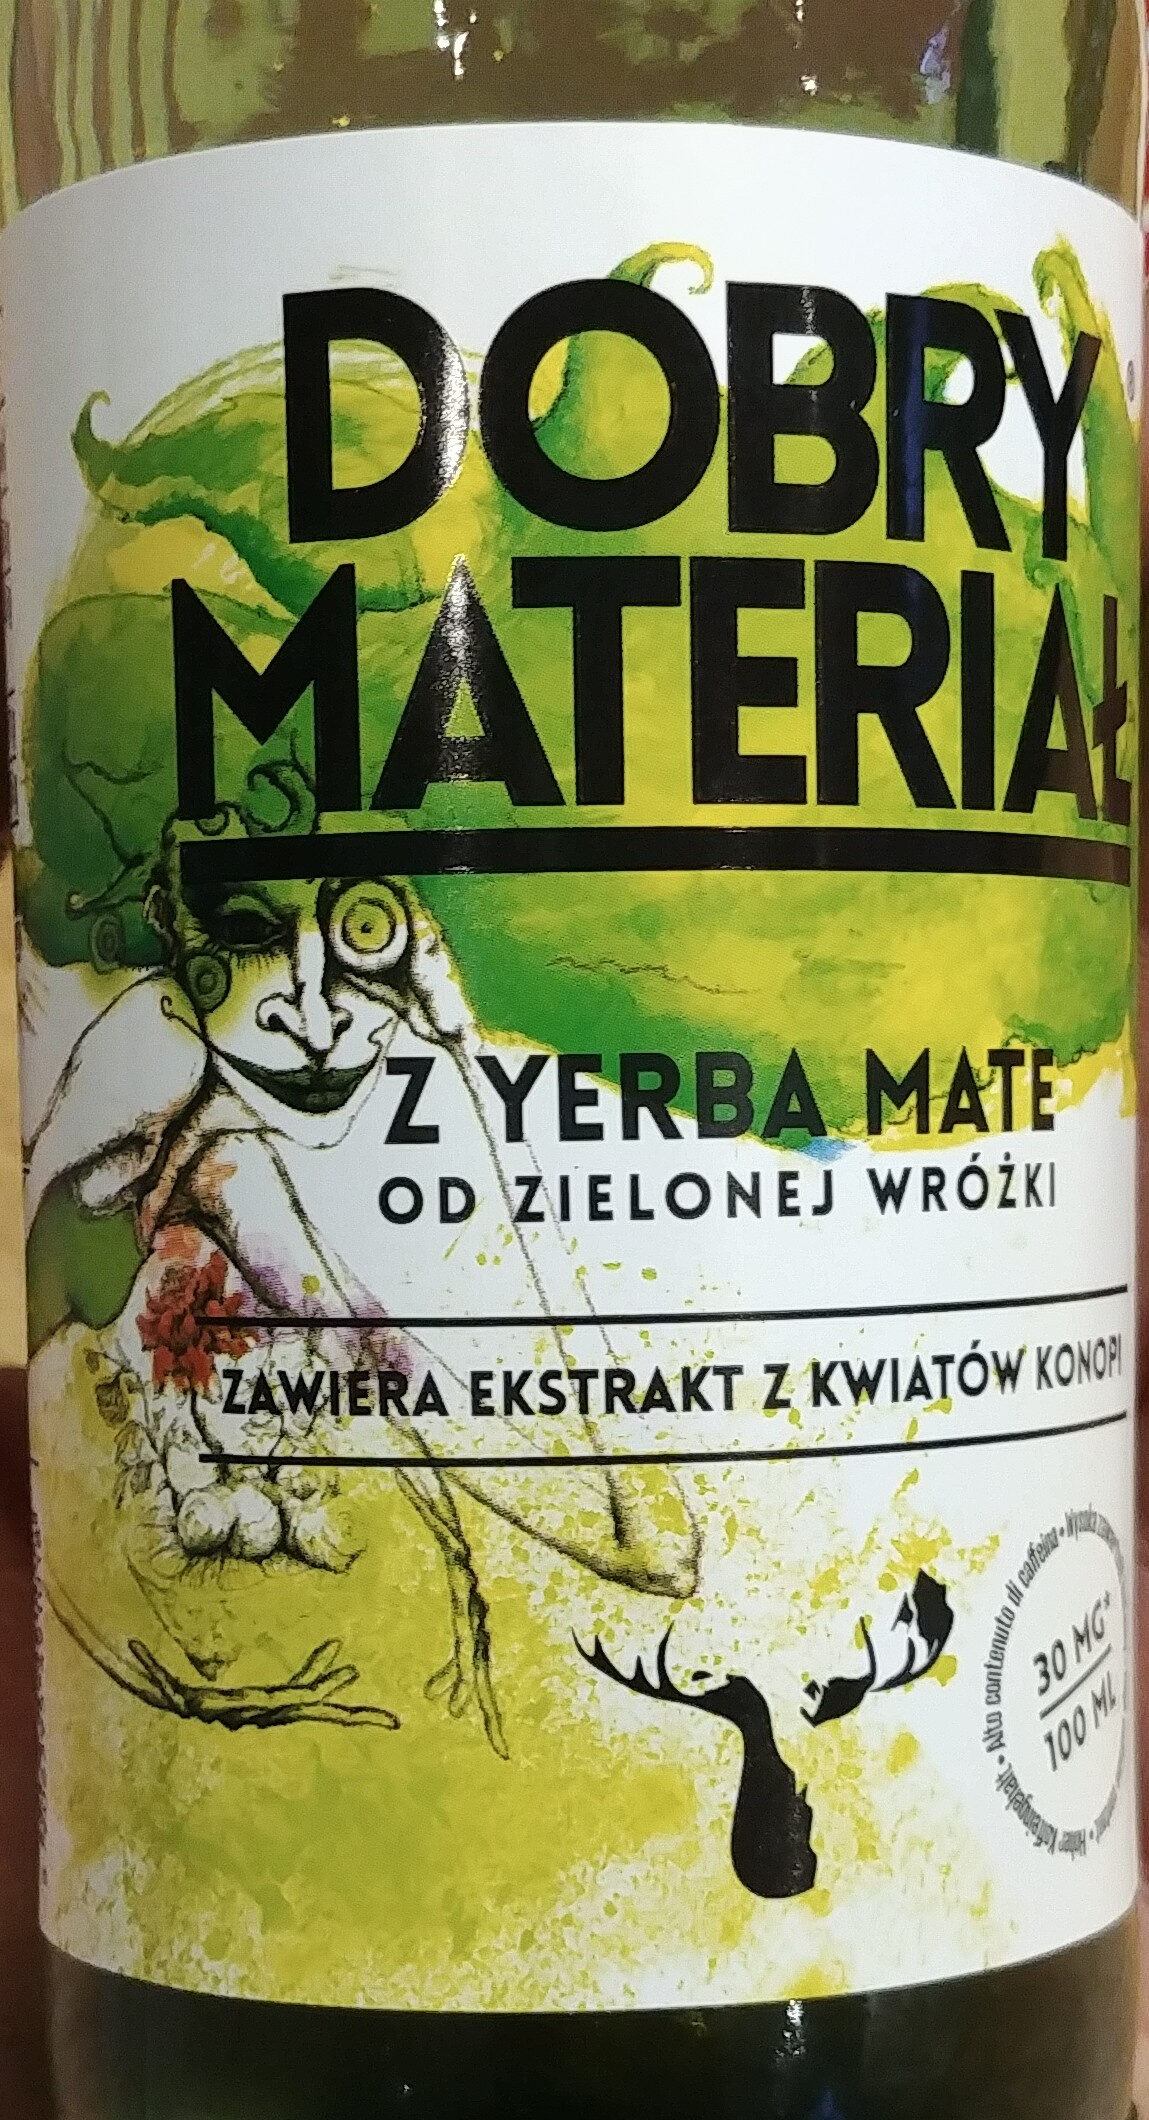 Dobry Materiał z yerba mate - Product - pl